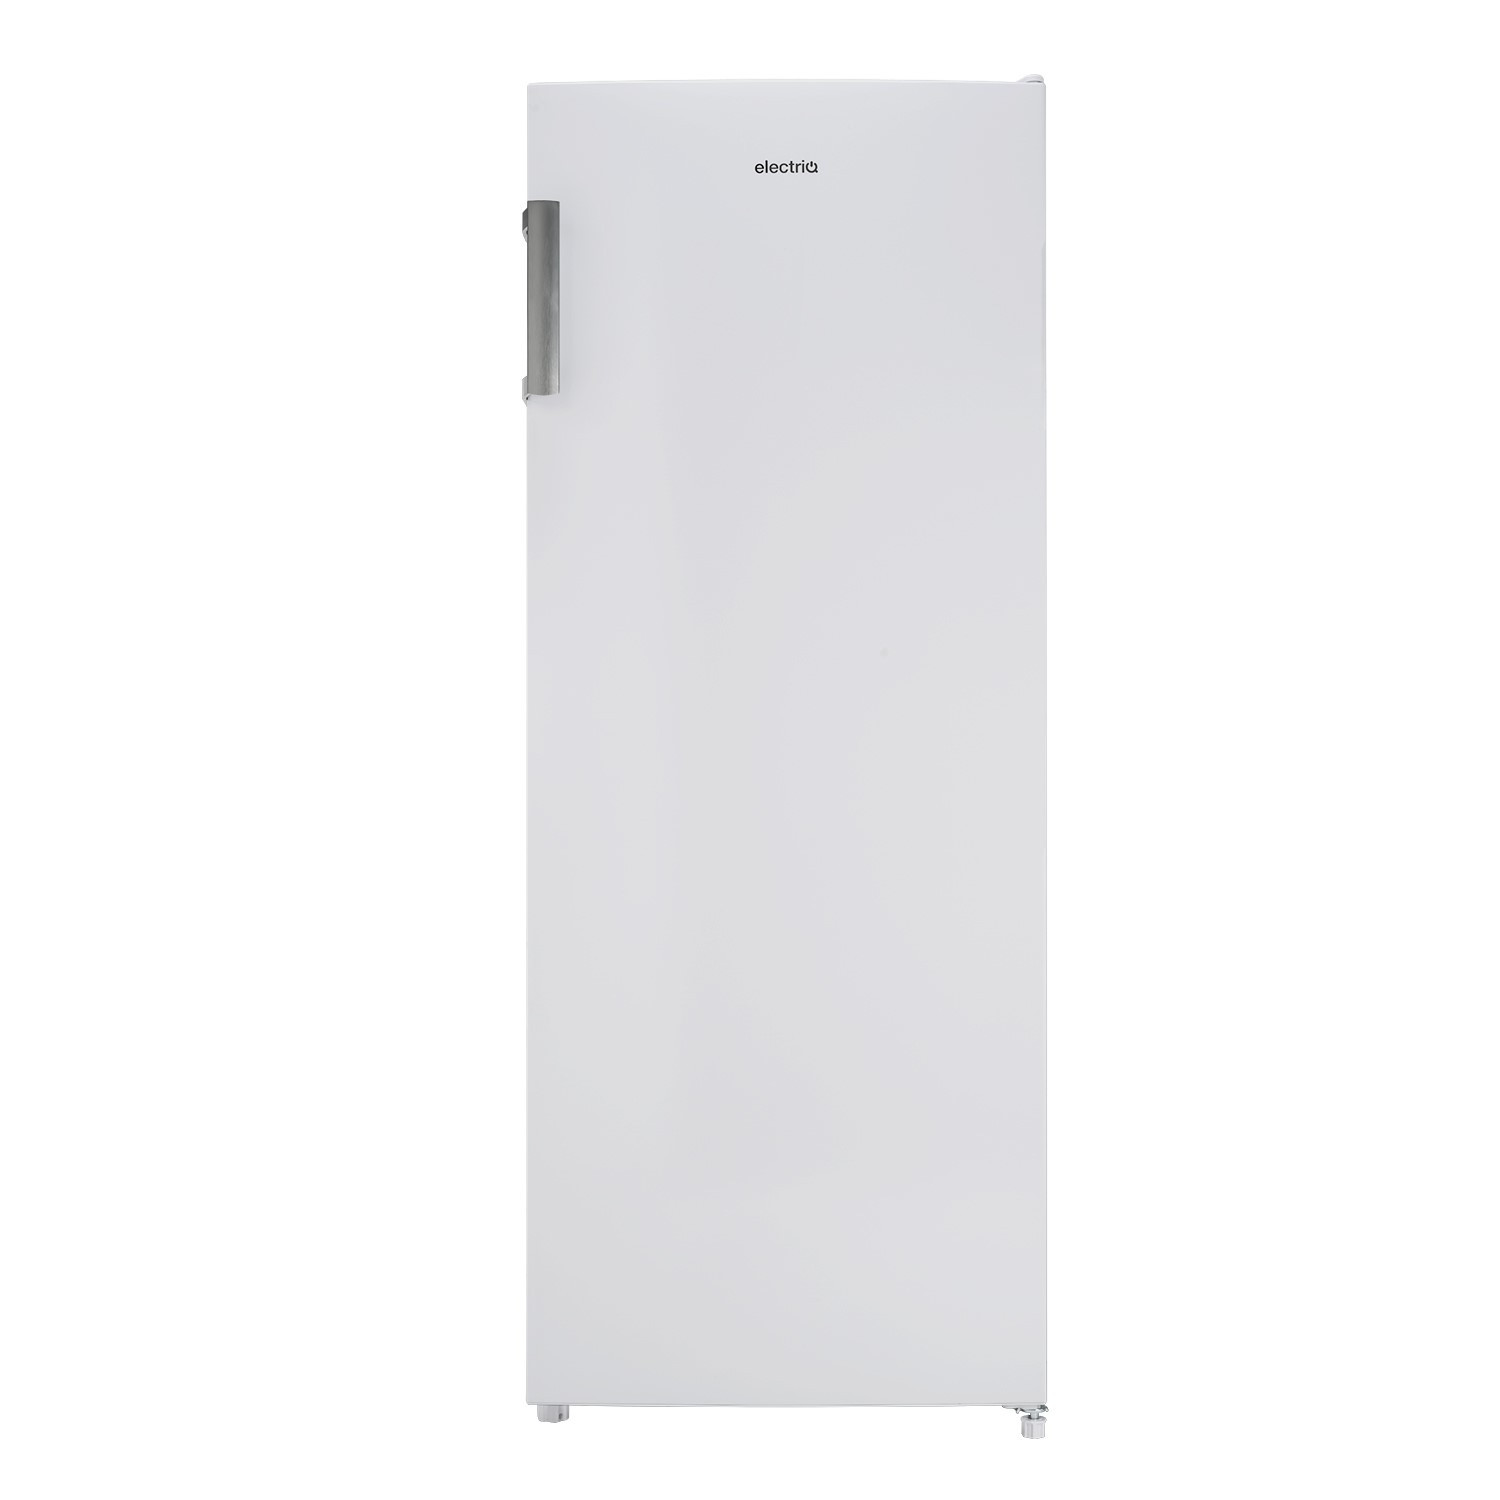 electriQ 166 Litre Freestanding Upright Freezer - White